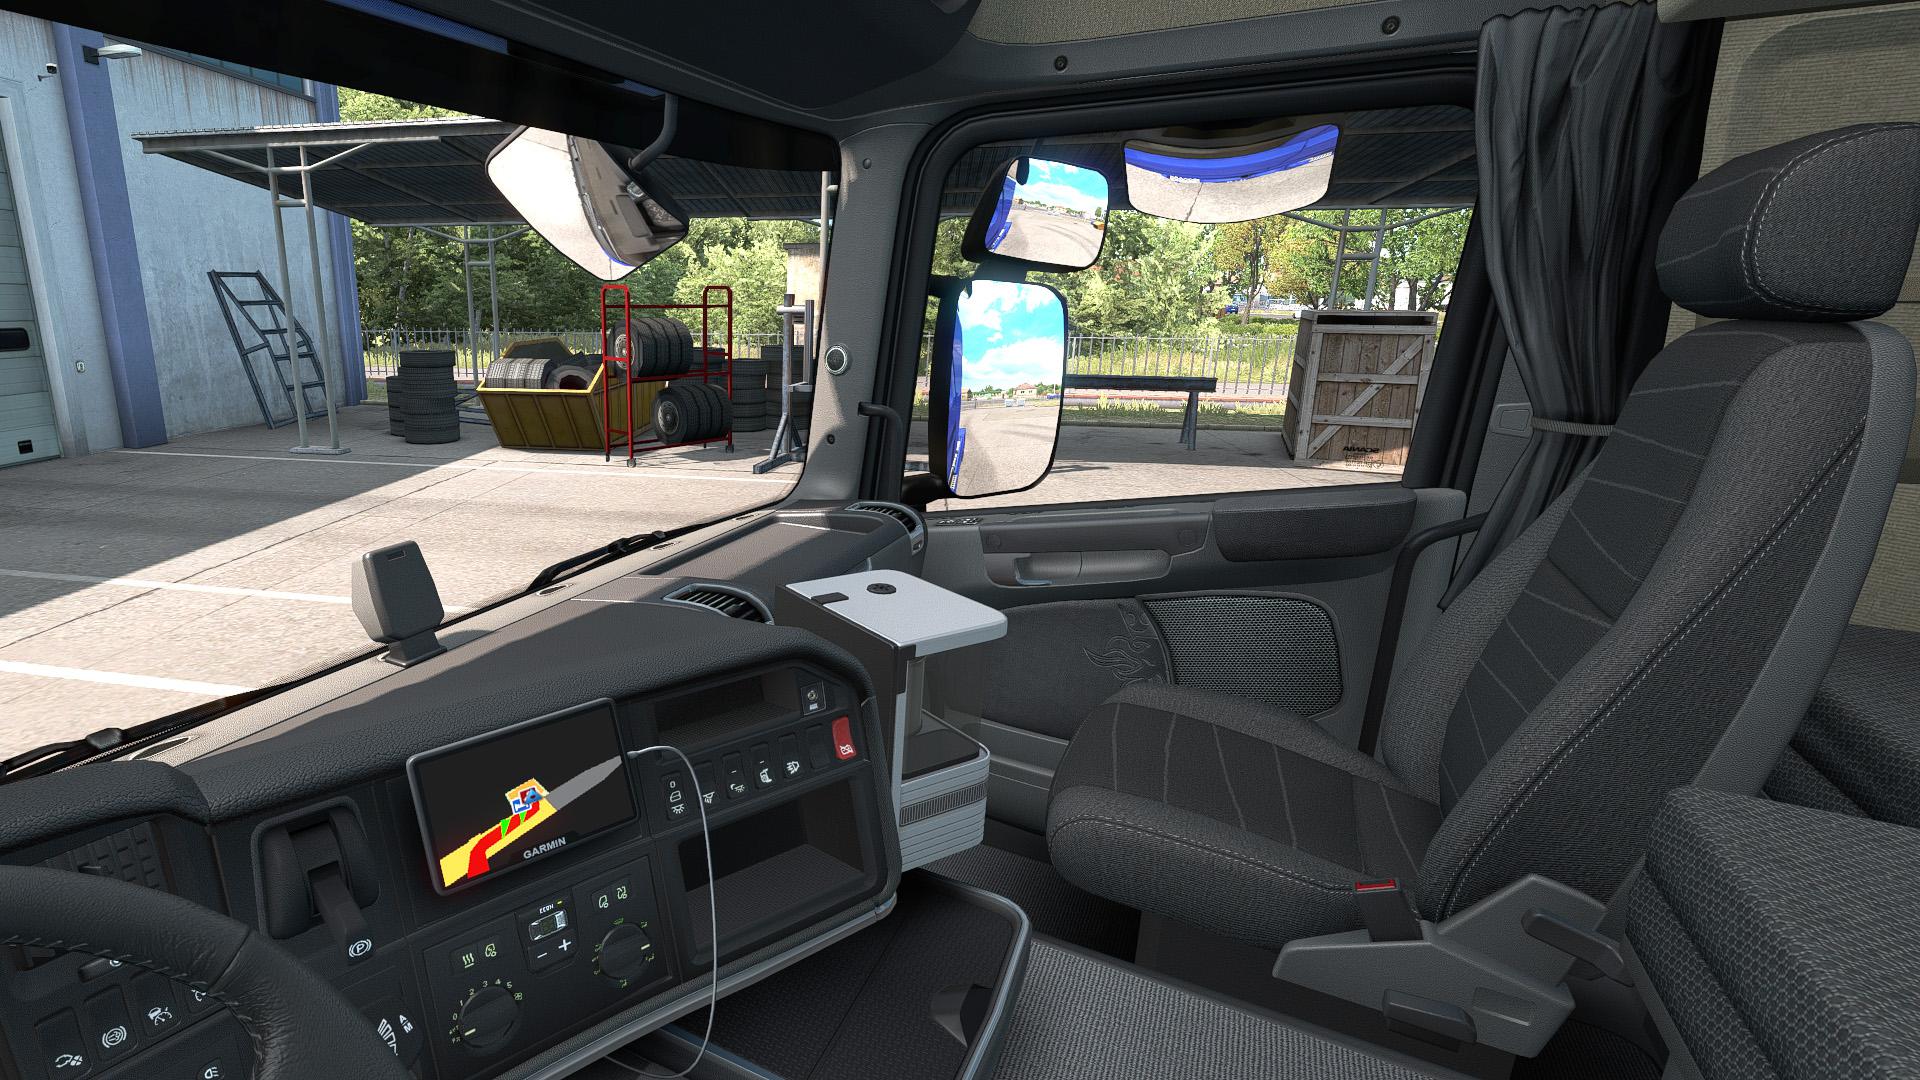 euro truck simulator 2 32 bit